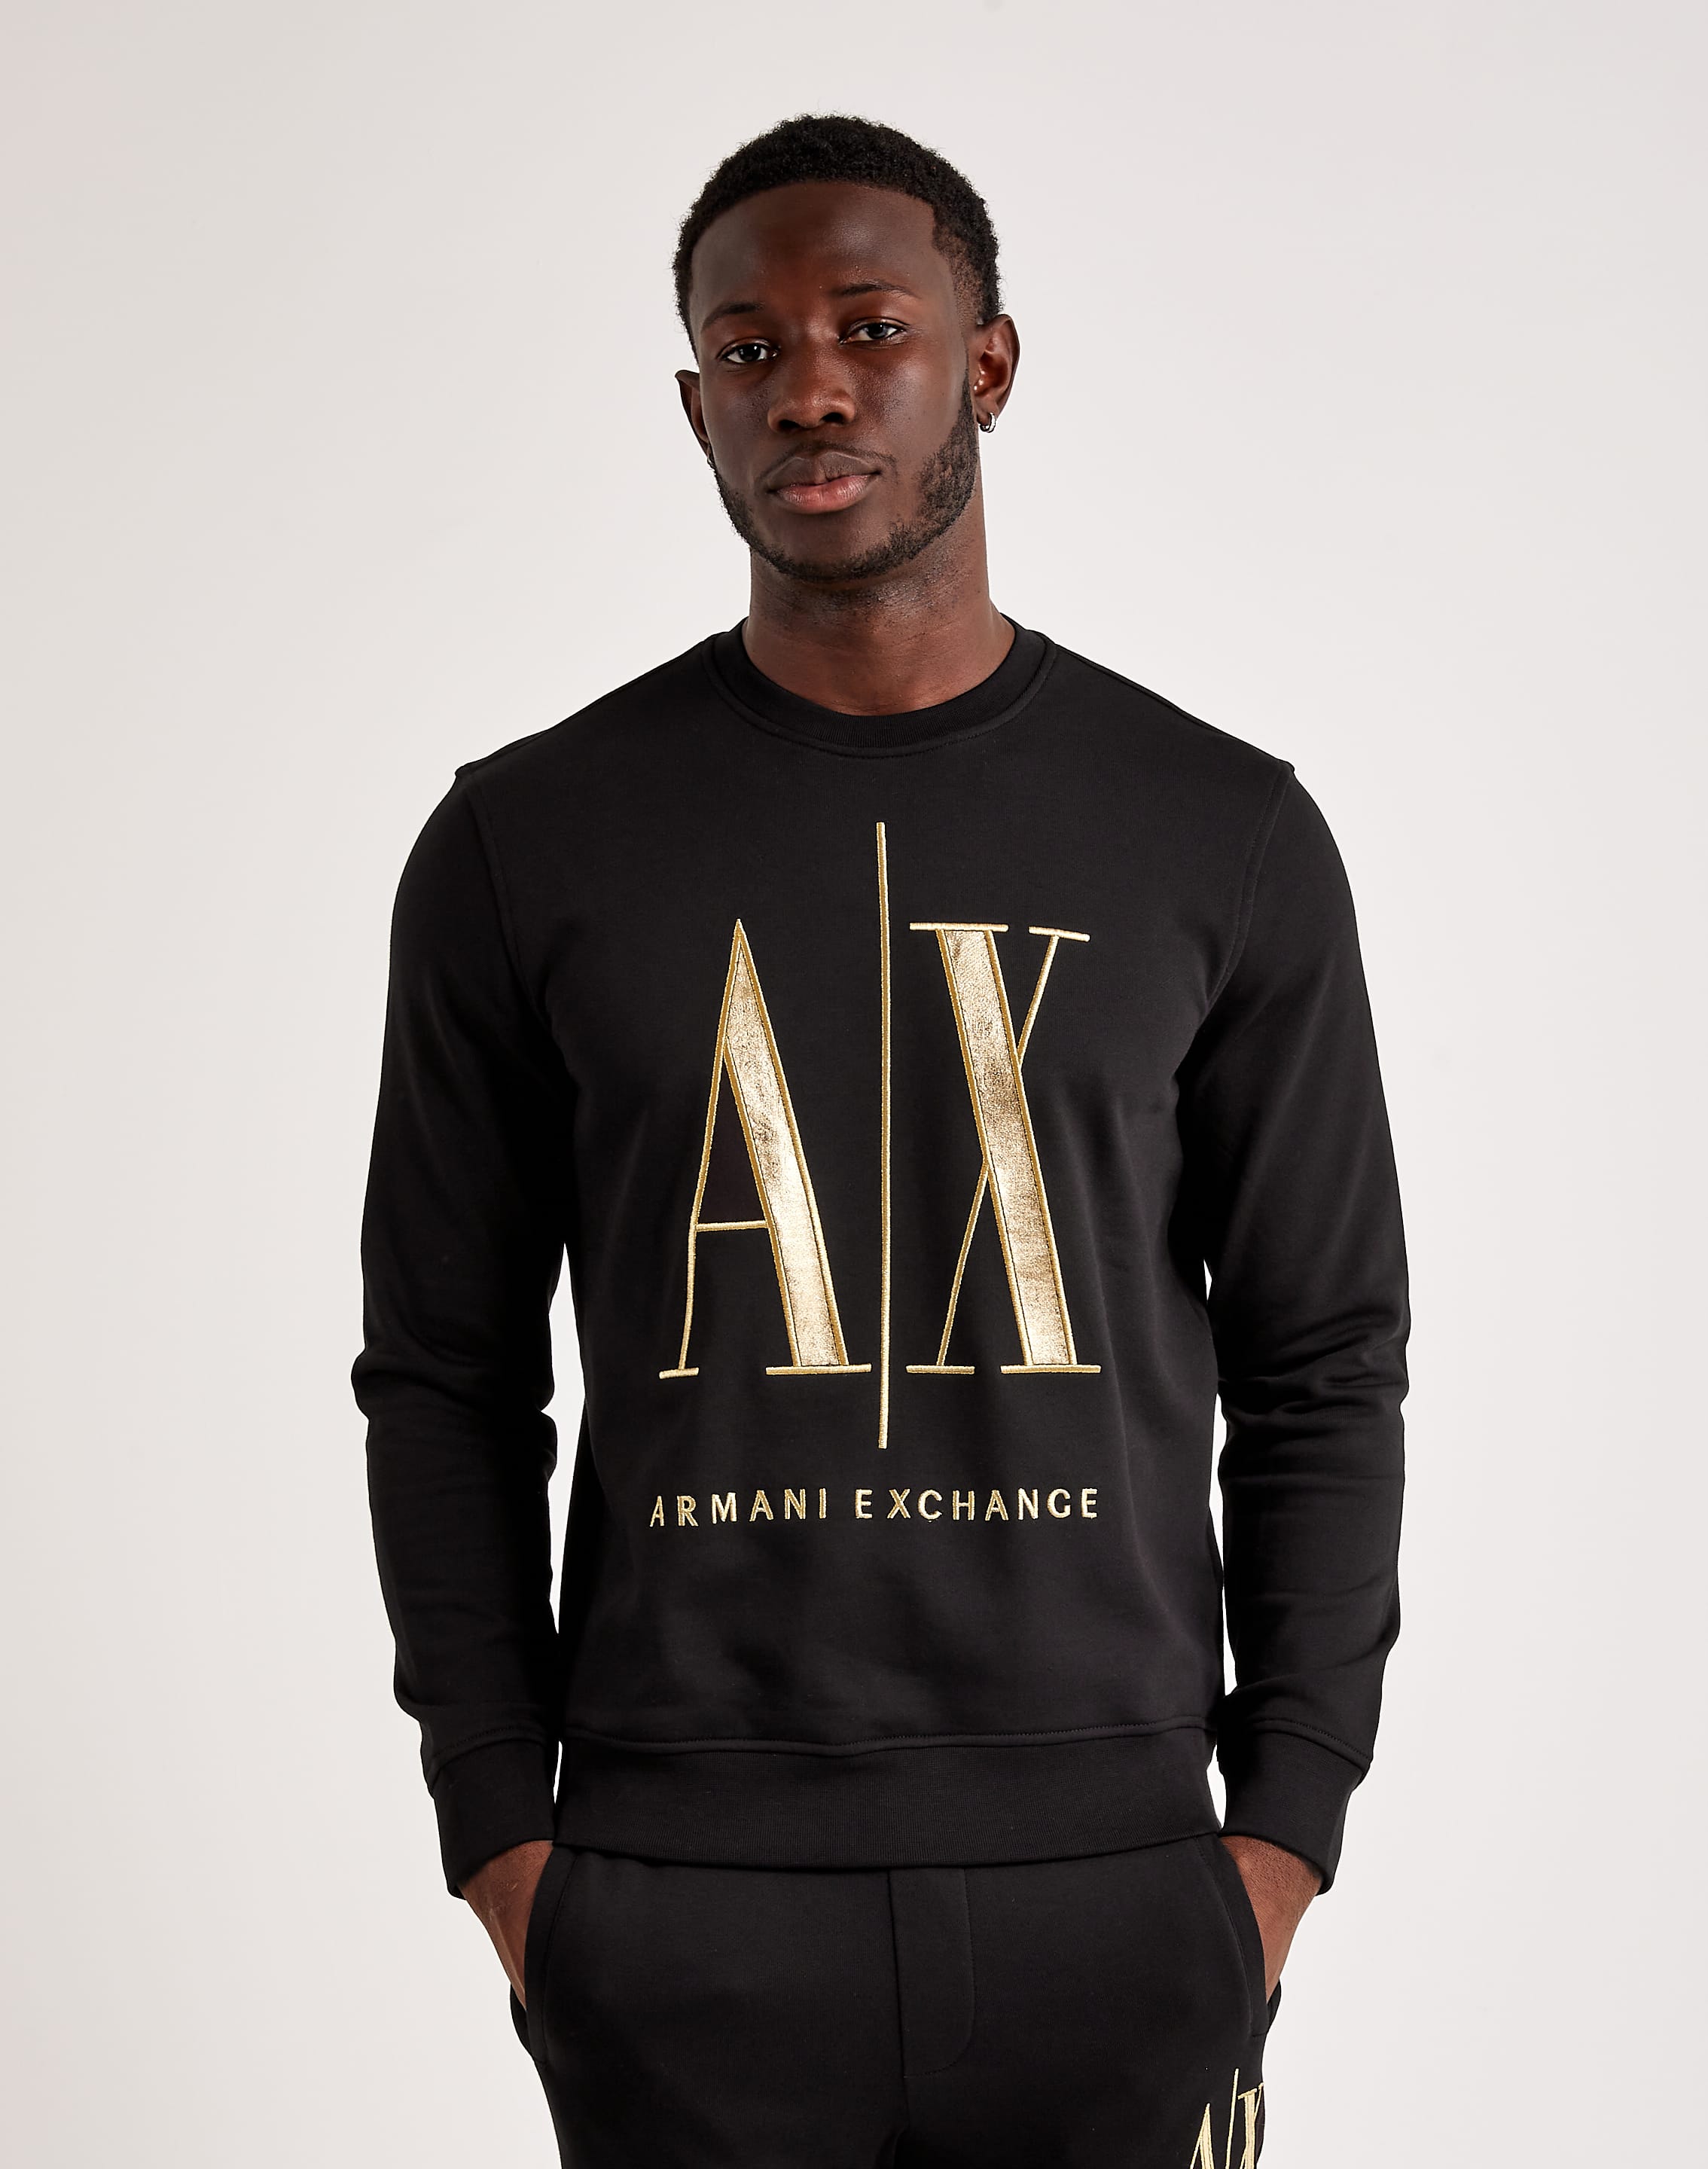 Buy Armani Exchange AX Logo Underwear, Set of 2 for Mens